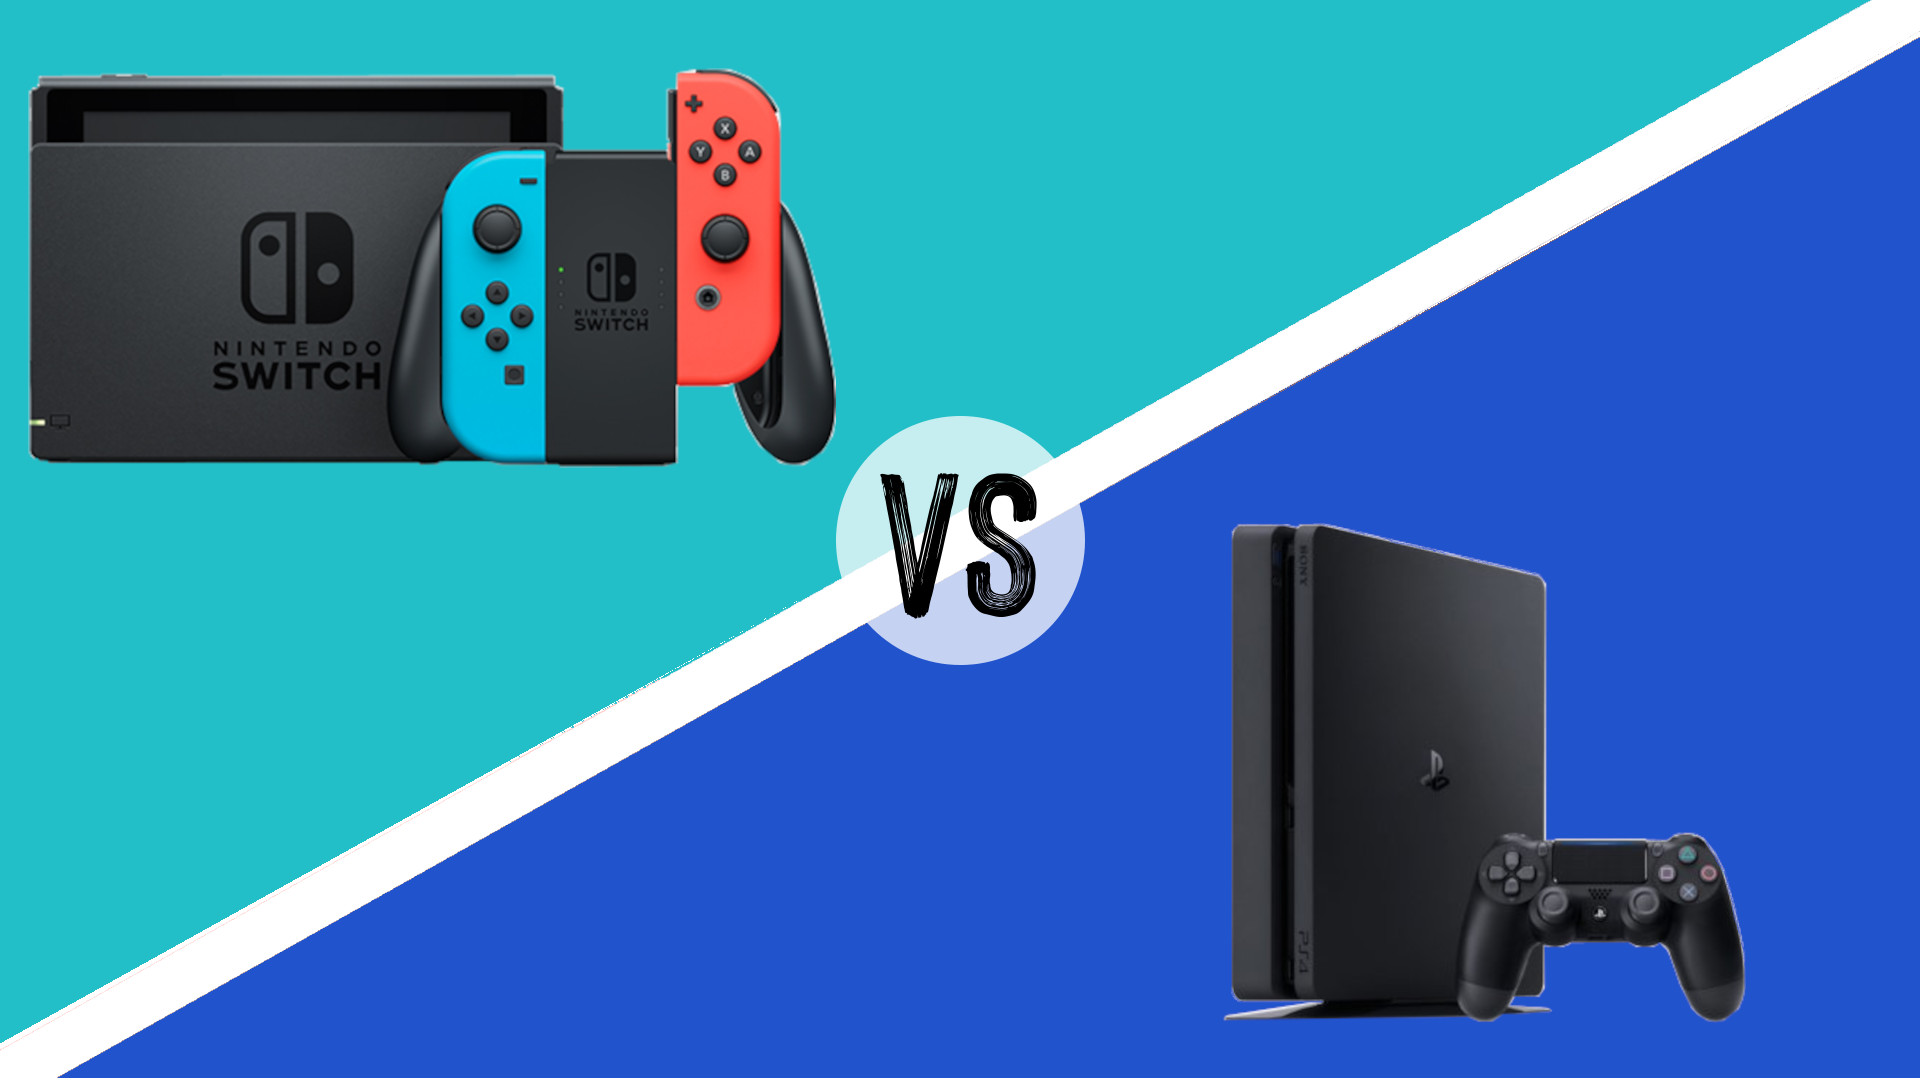 Camino Engreído Órgano digestivo Nintendo Switch vs PS4: Which should you buy? | Creative Bloq